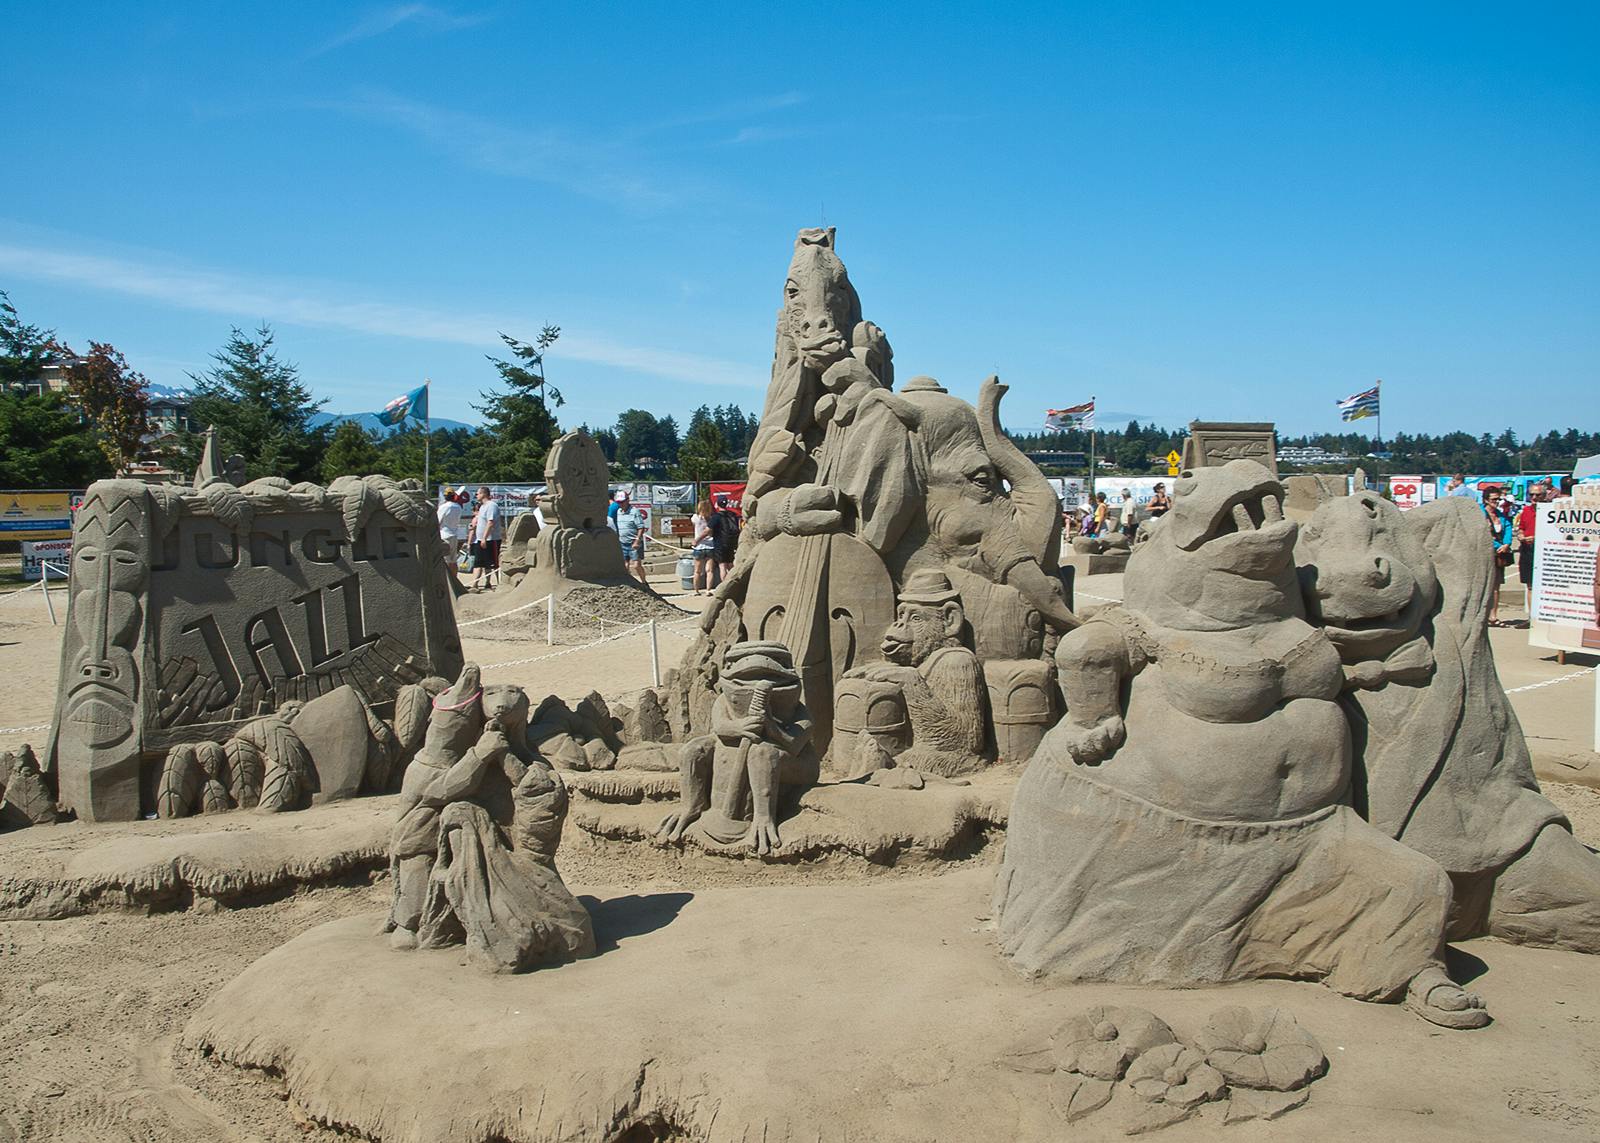 Sandcastle competition